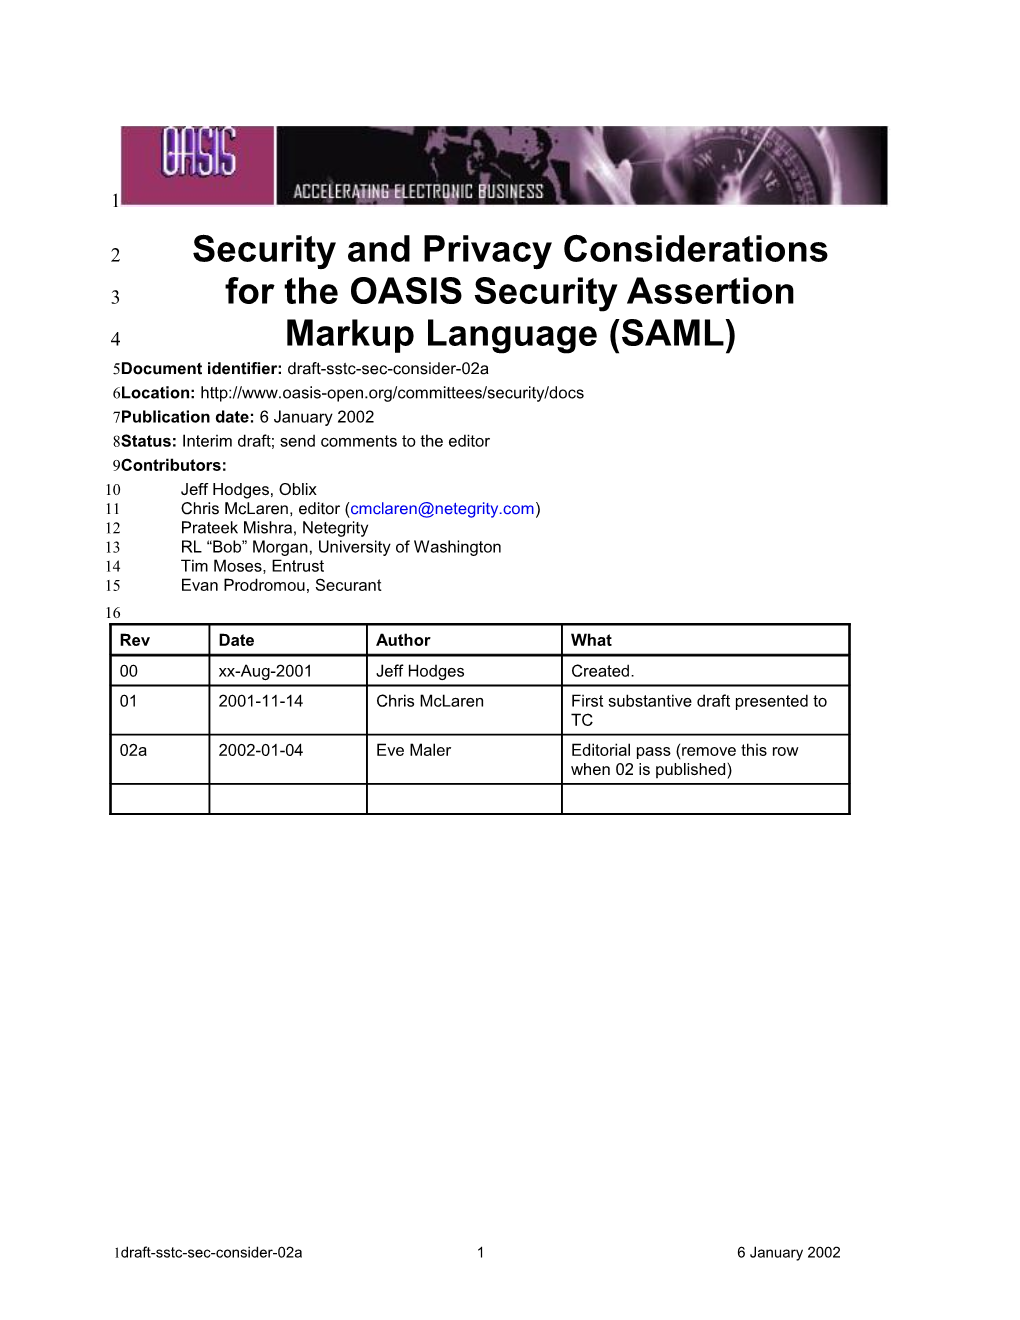 SAML Security Considerations s1